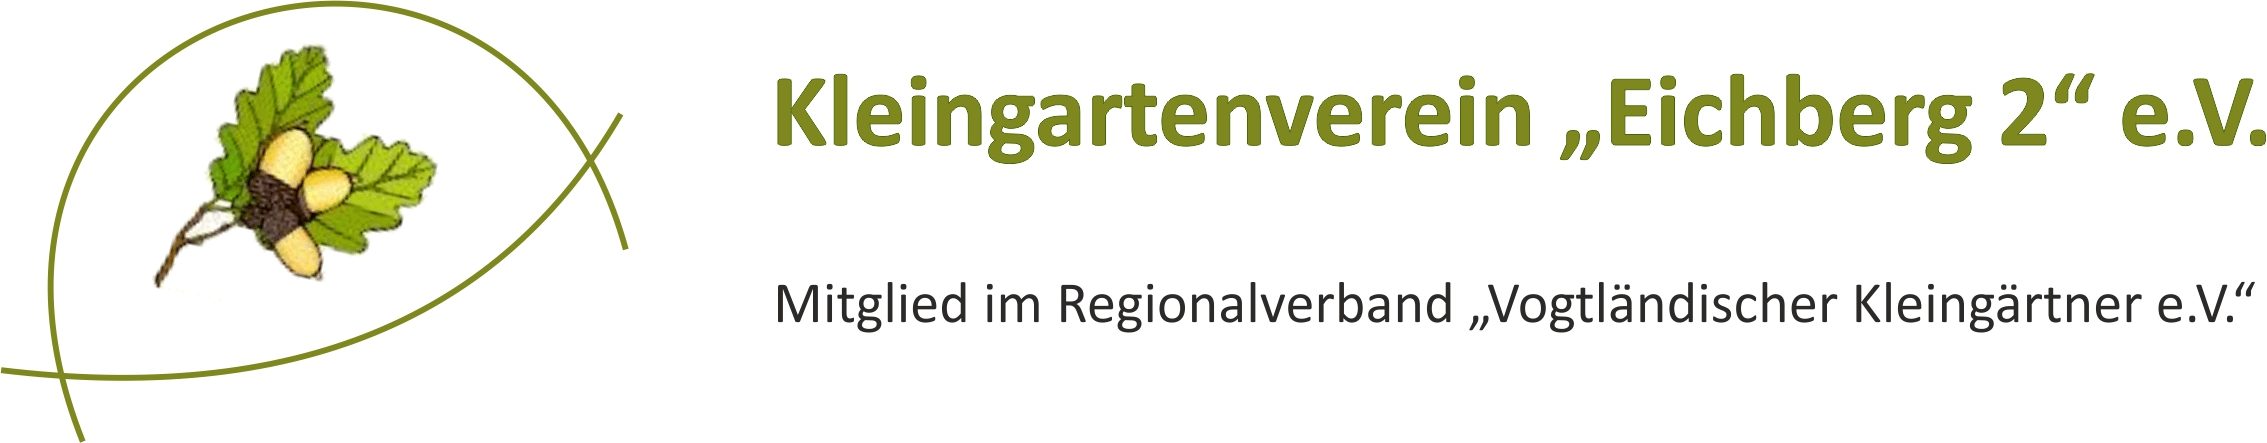 Kleingartenverein Eichberg 2 e.V.